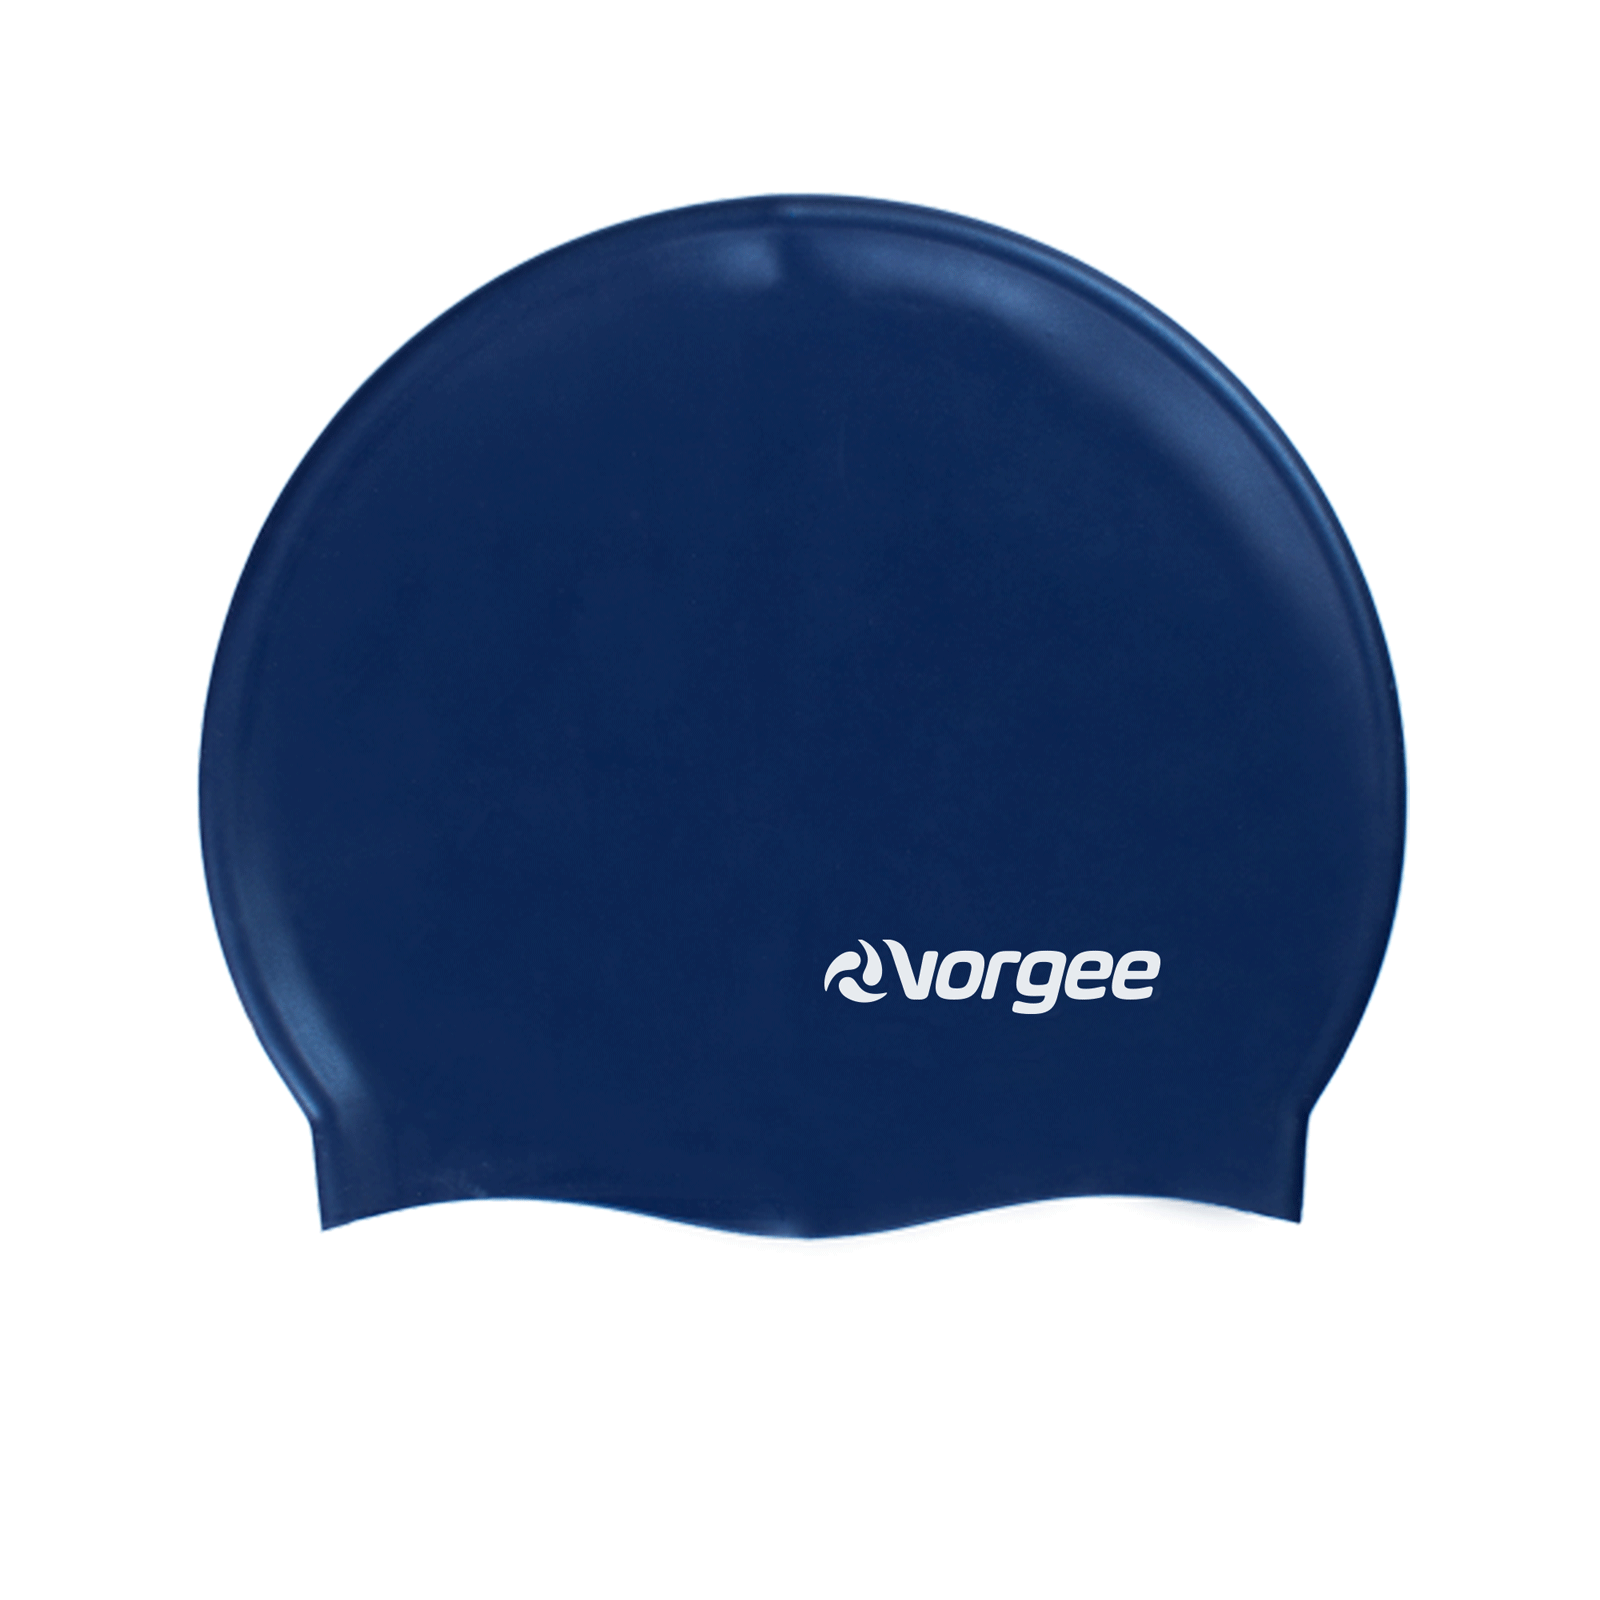 Vorgee Superflex Silicone Swimming Cap